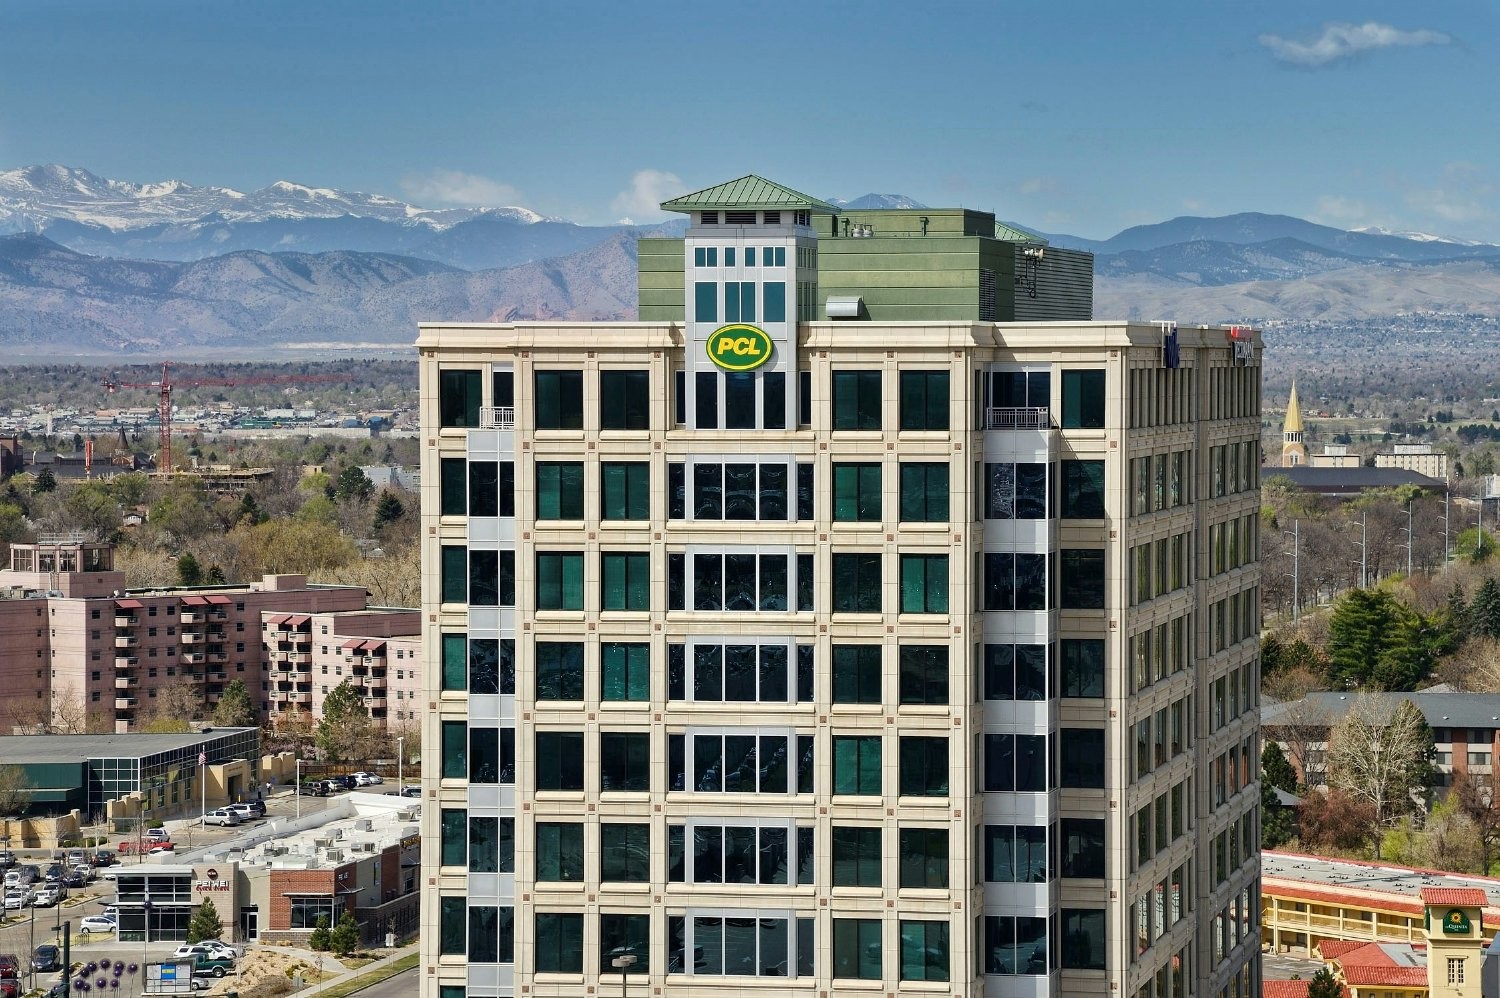 PCL's U.S. Head Office located in Denver, Colorado